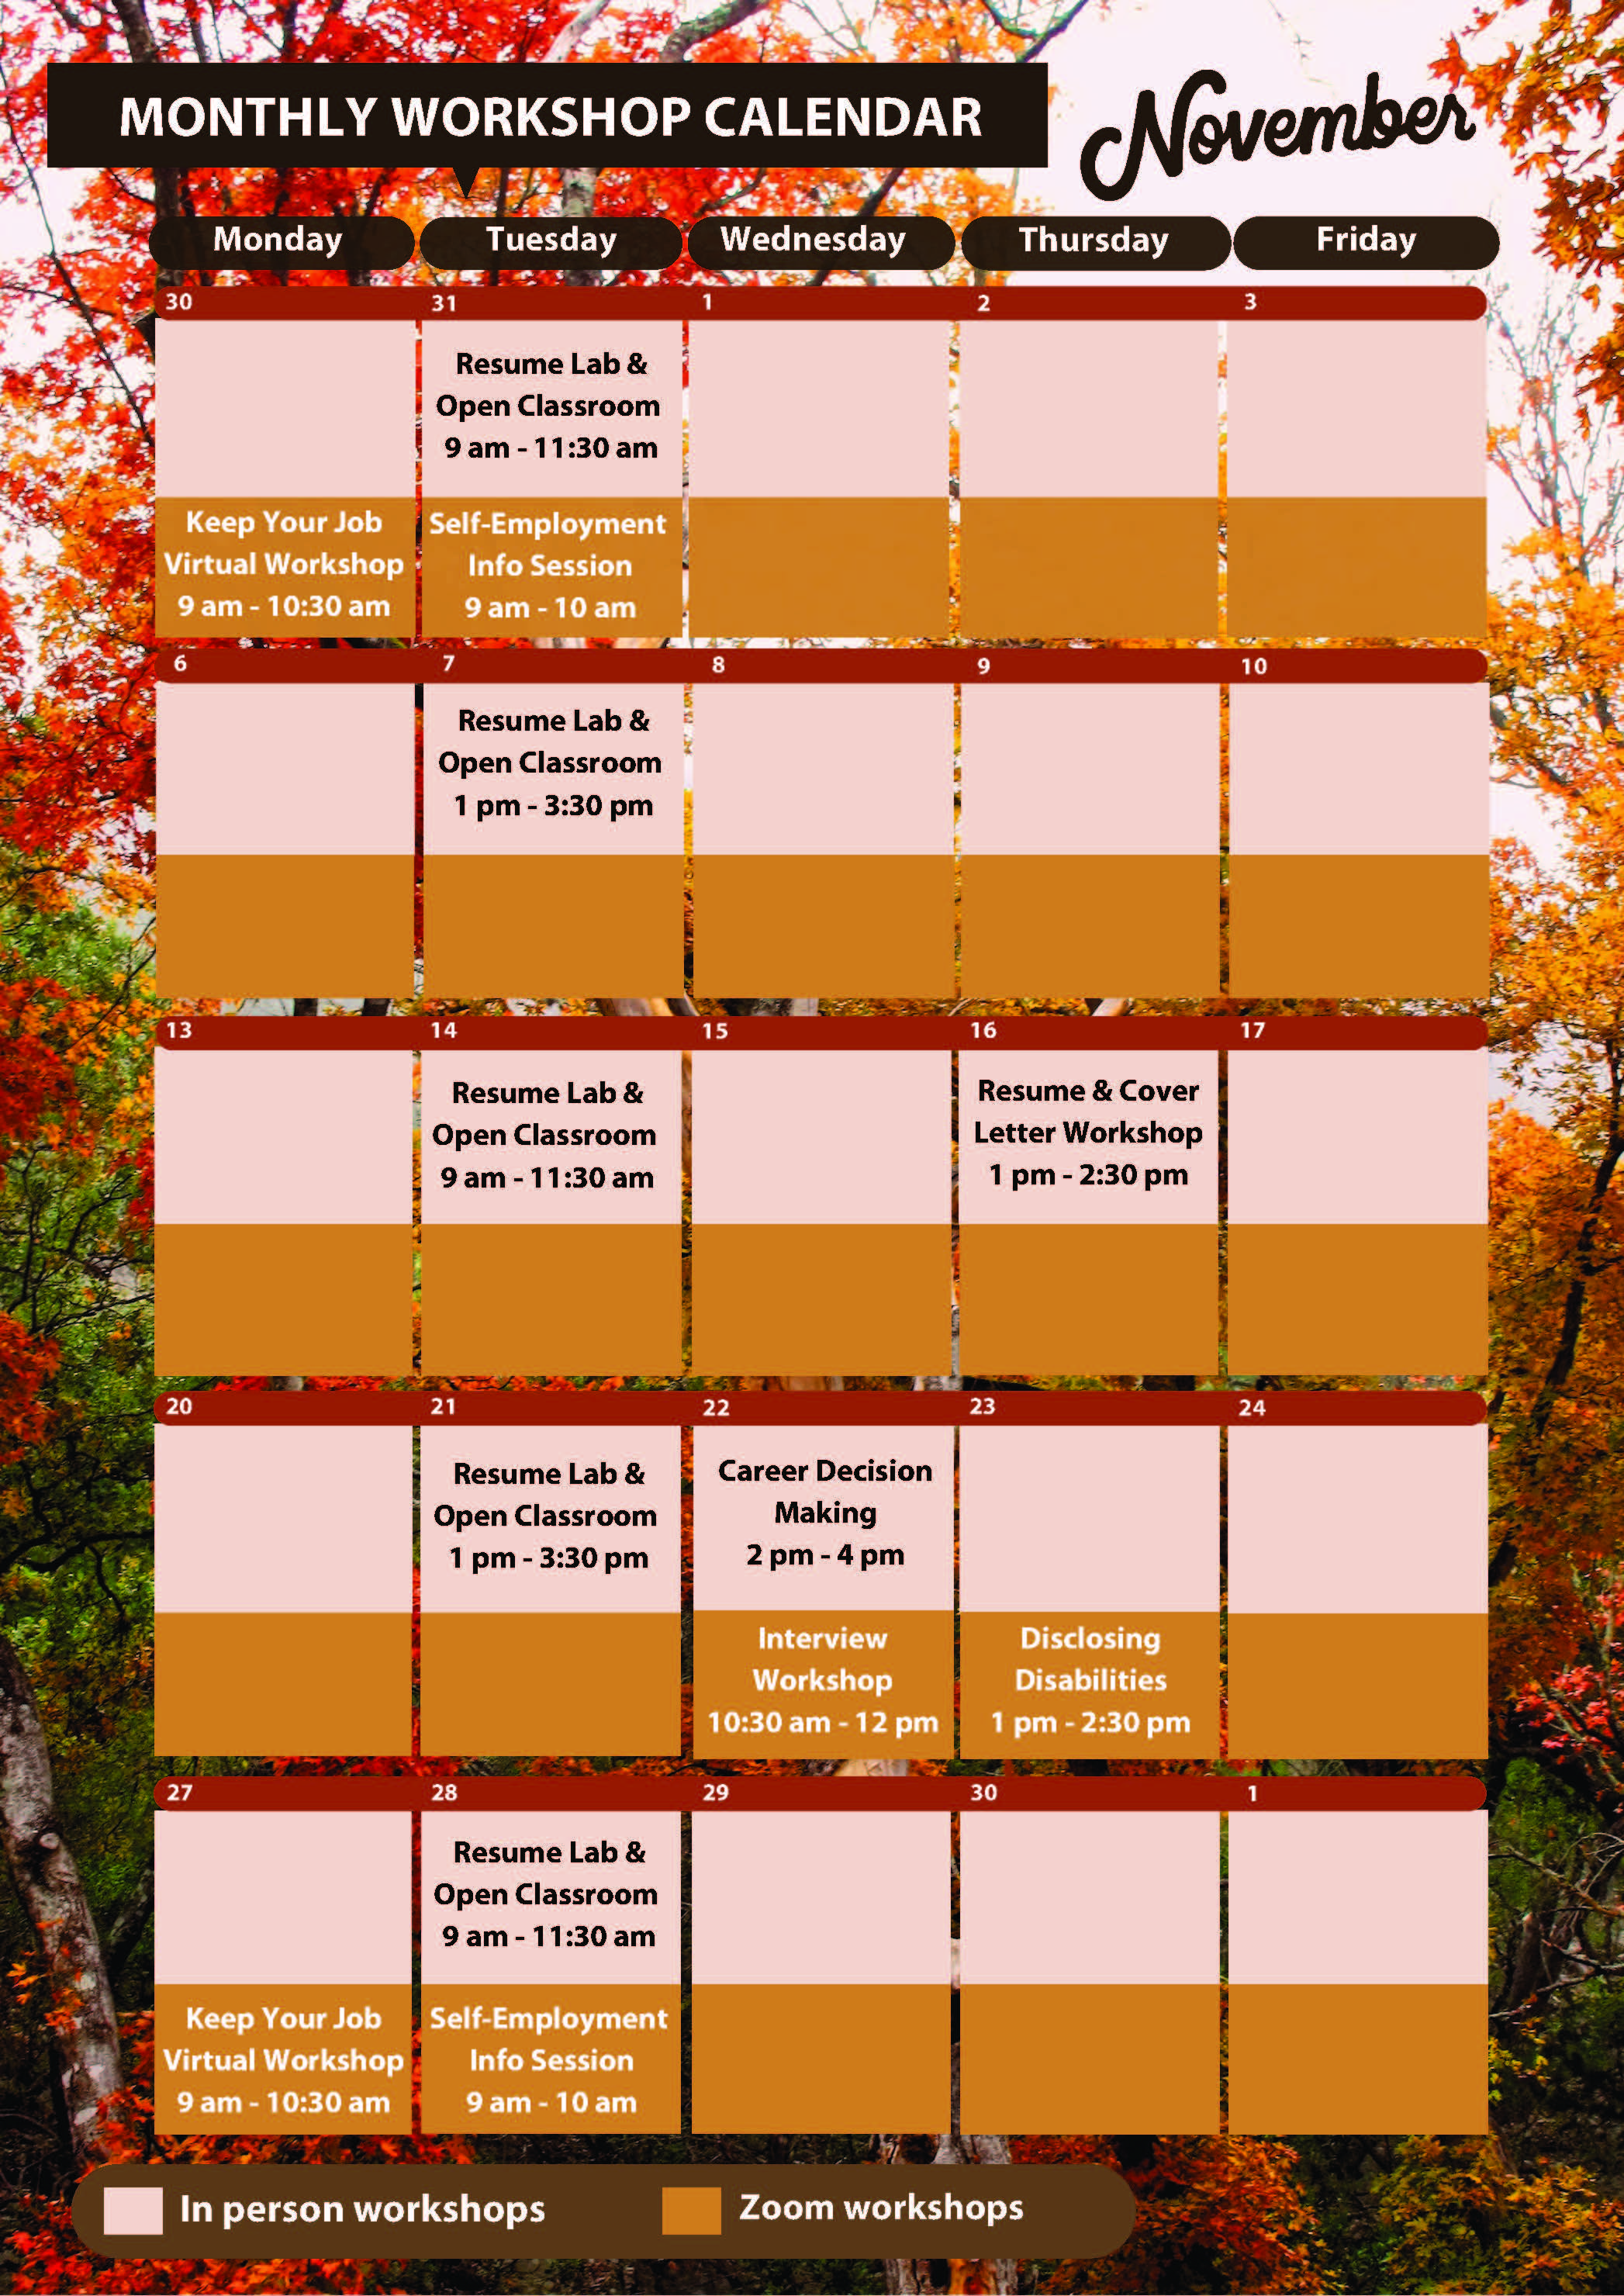 Calendar for workshops in November